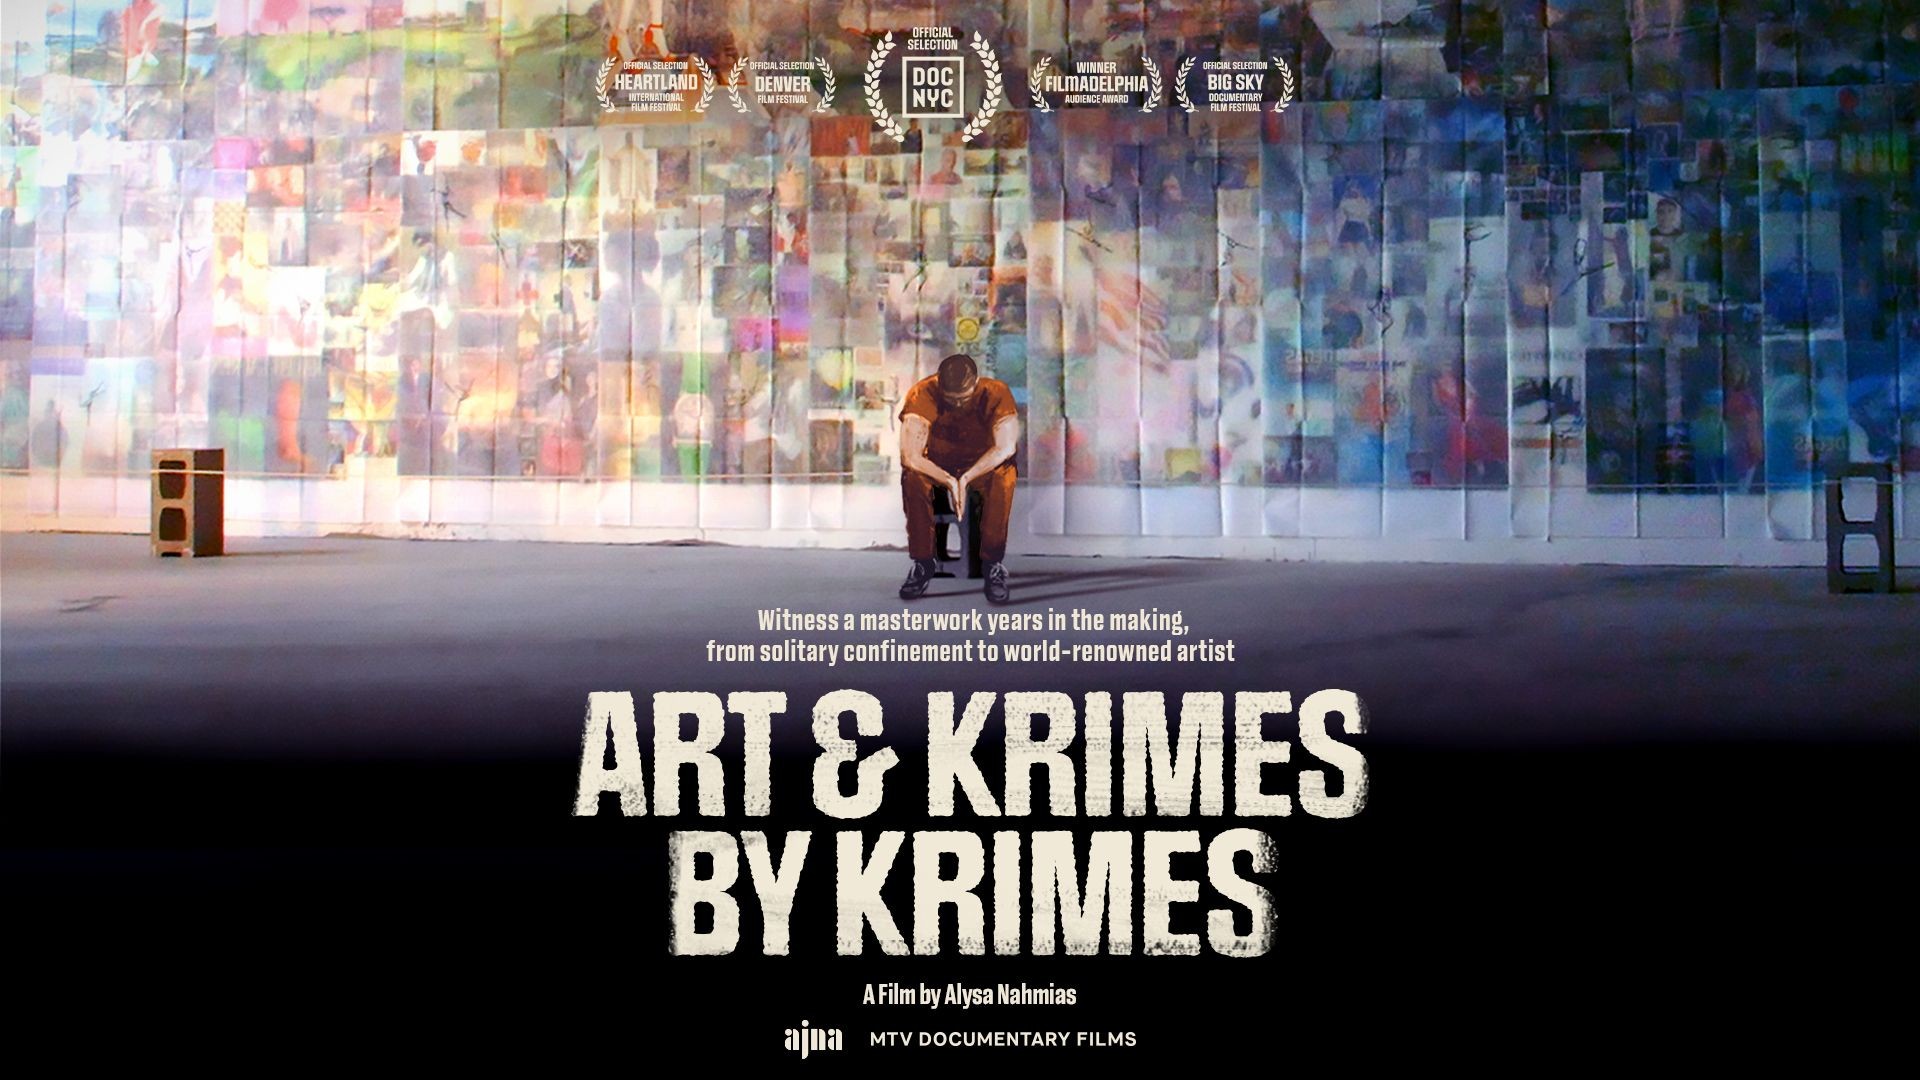 Art & Krimes By Krimes movie poster 